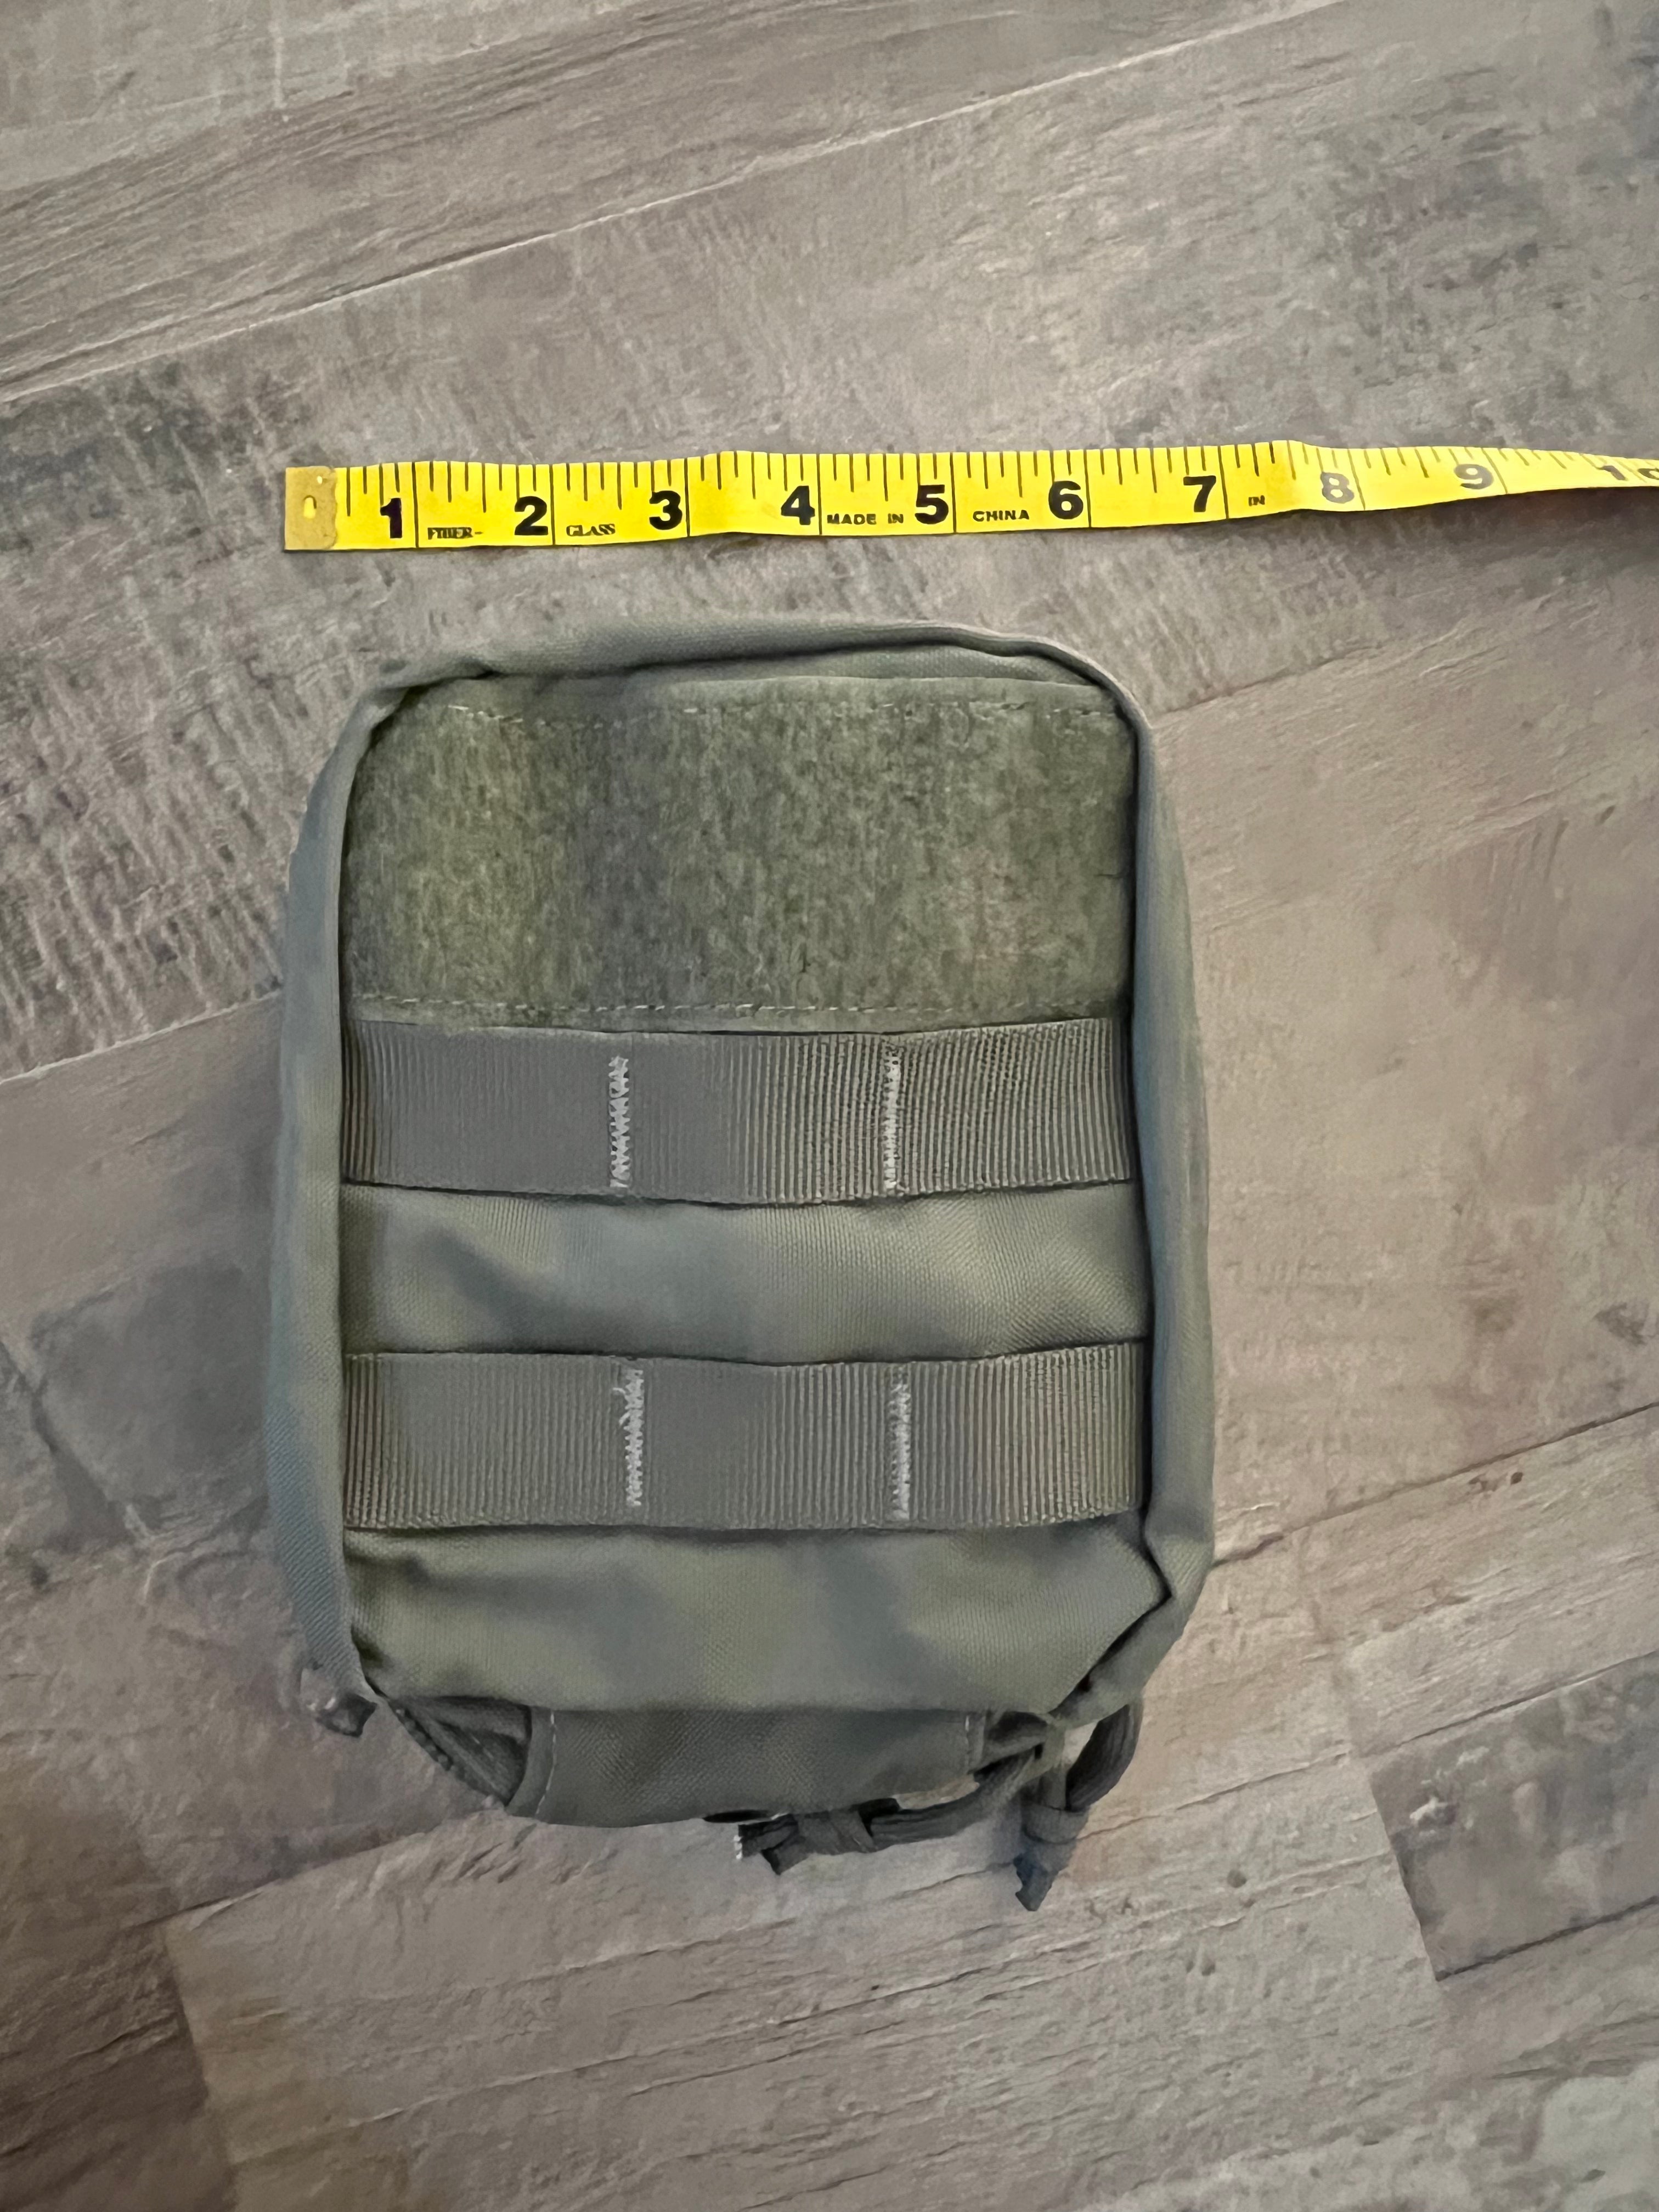 Tactical Operator Response Bag (TORK)